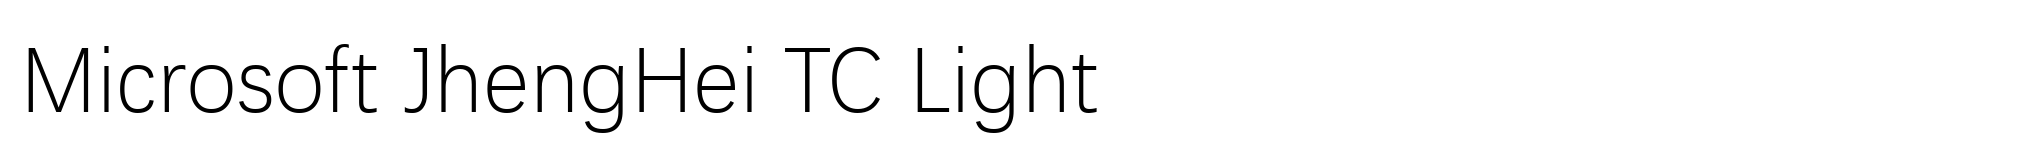 Microsoft JhengHei TC Light image